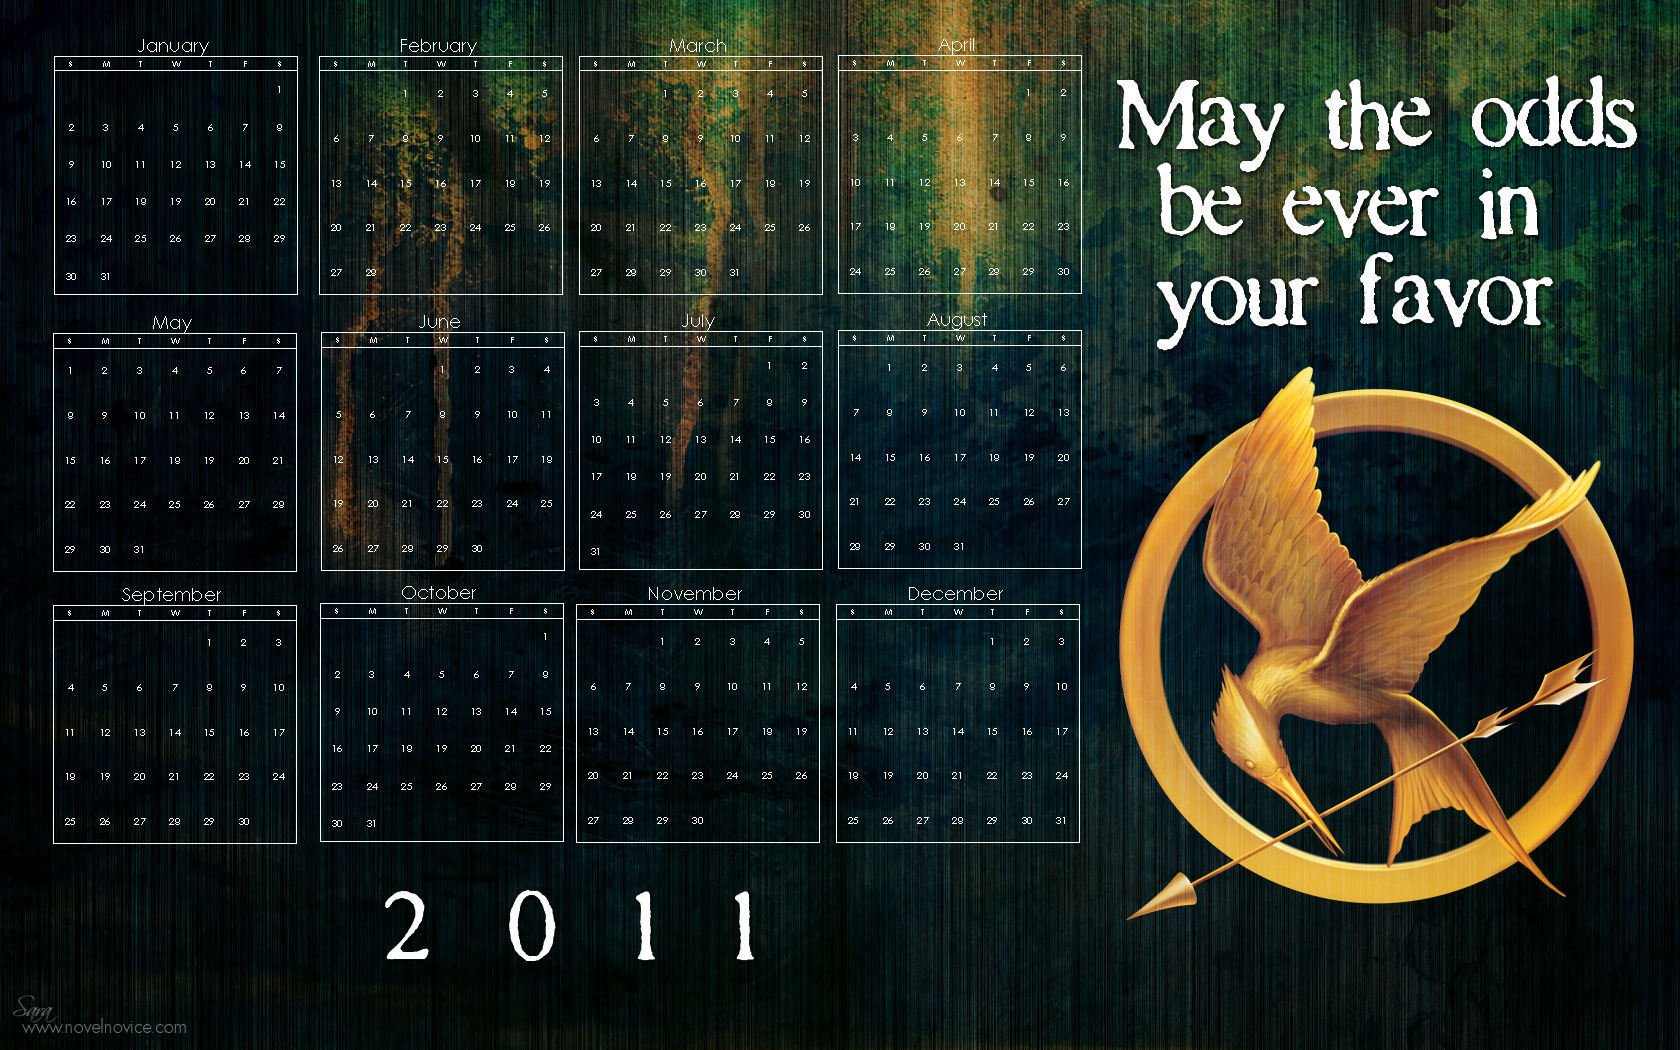 The Hunger Games 2011 Calendar Wallpaper   The Hunger Games Wallpaper